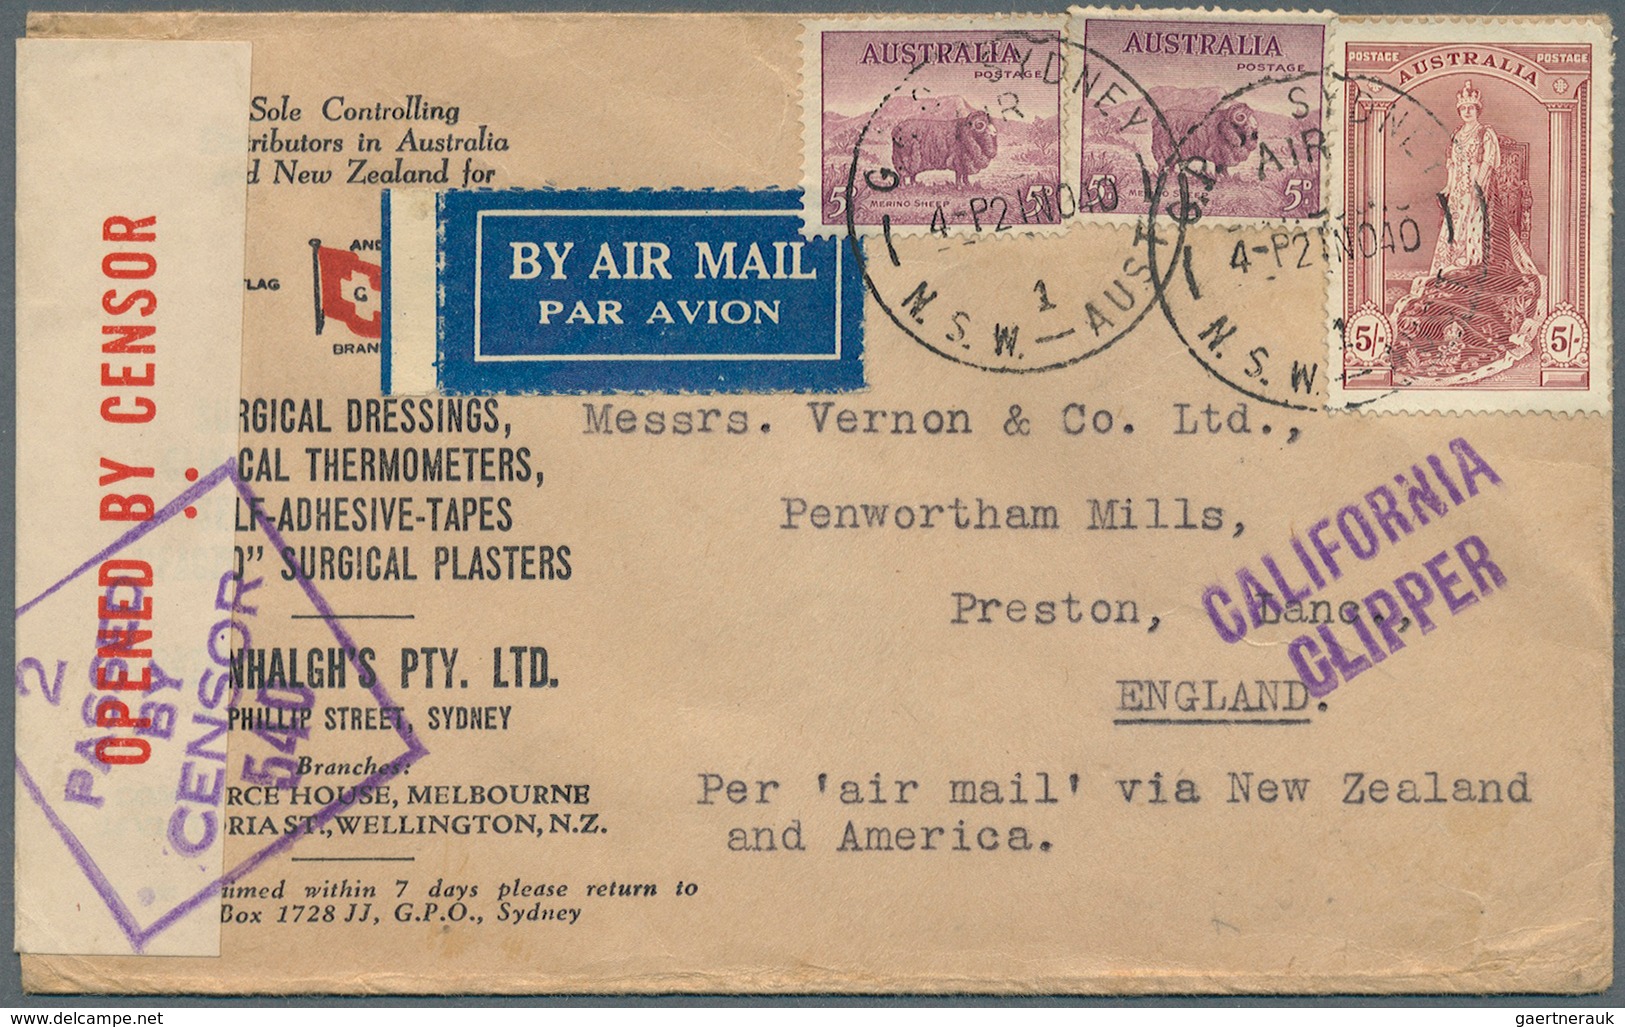 22217 Australien: 1910/1942, Australia/NZ, group of 20 better entires, registered, censored and airmail, P